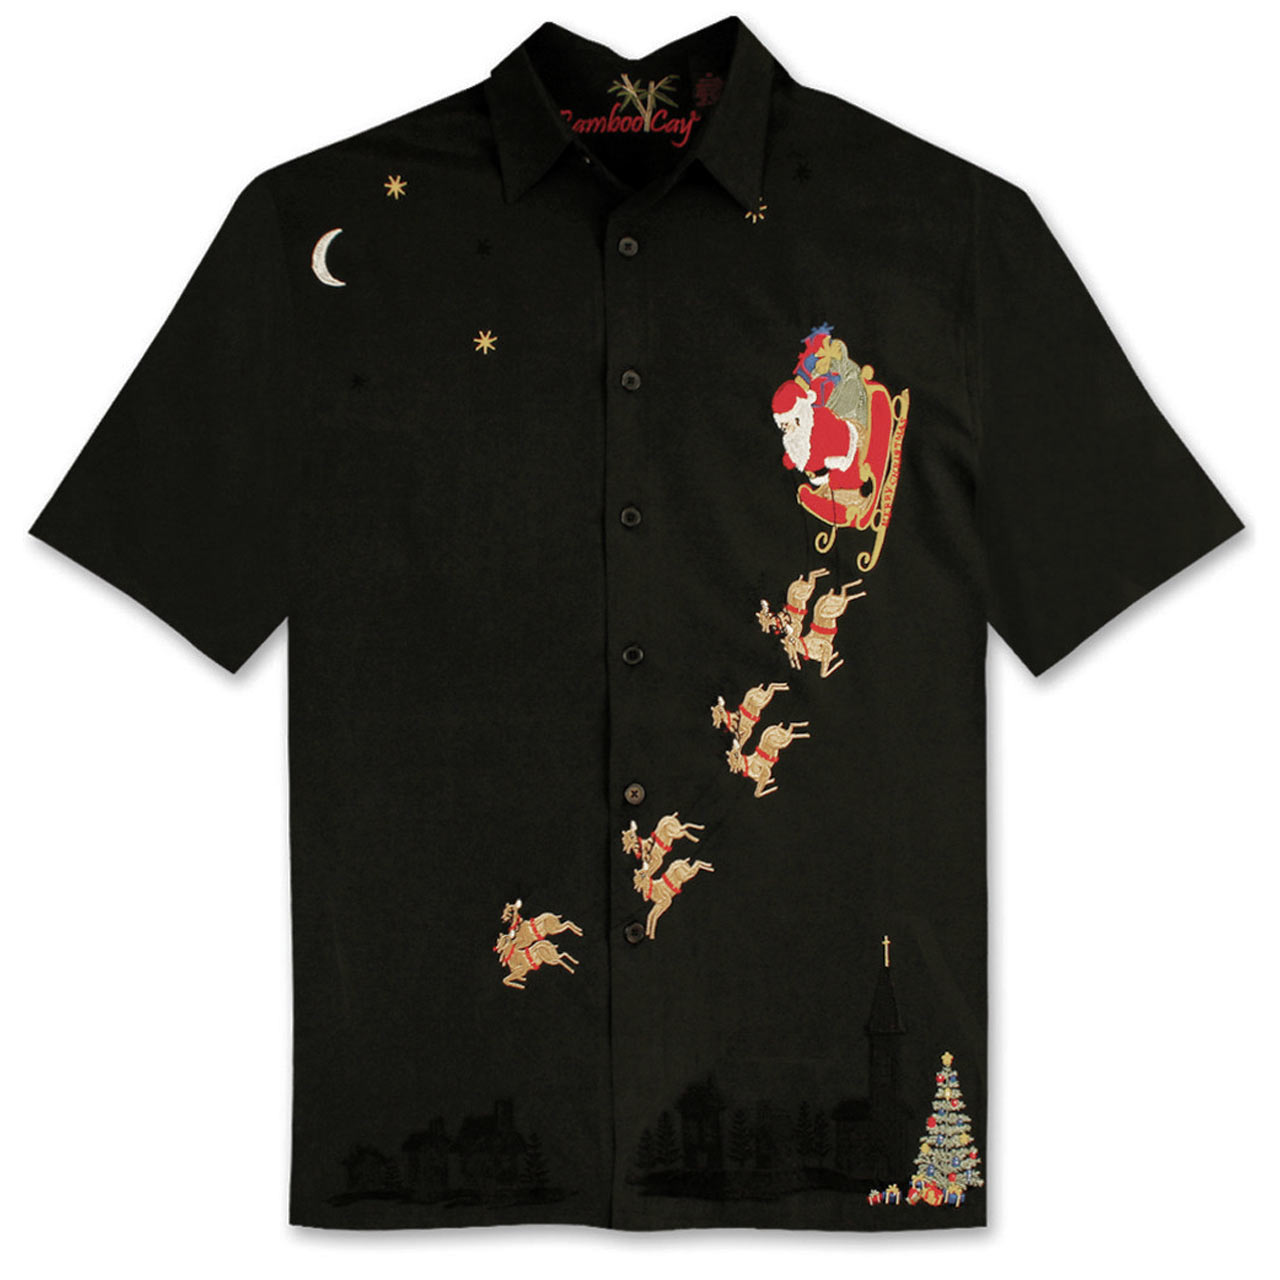 Men's Bamboo Cay Short Sleeve Embroidered Limited Edition Aloha Christmas Shirt, Santa's Landing #SN2207 Black